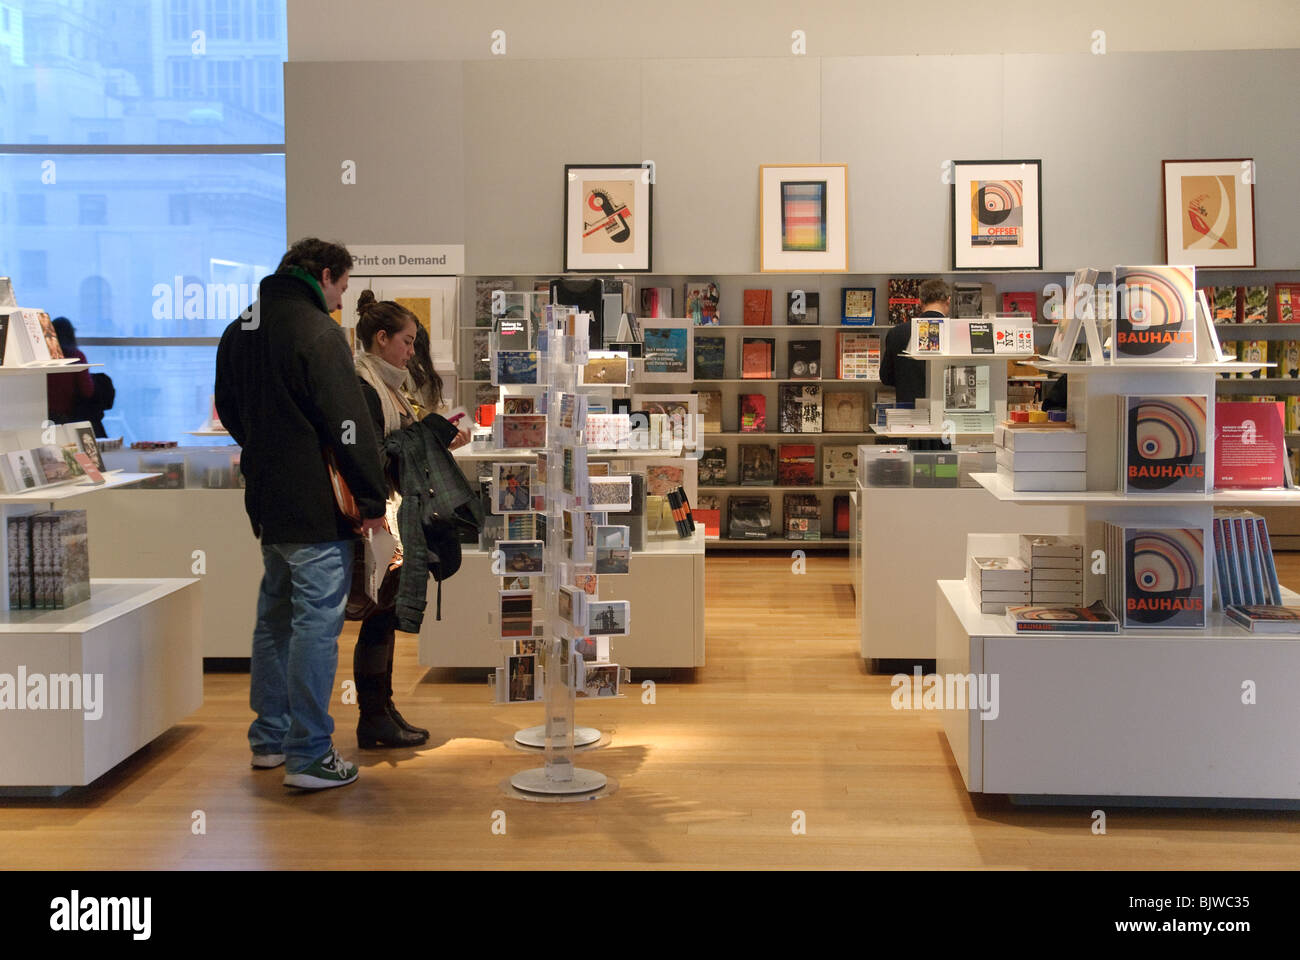 MOMA, Museum of Modern Art, Book Shop, New York City Stock Photo - Alamy